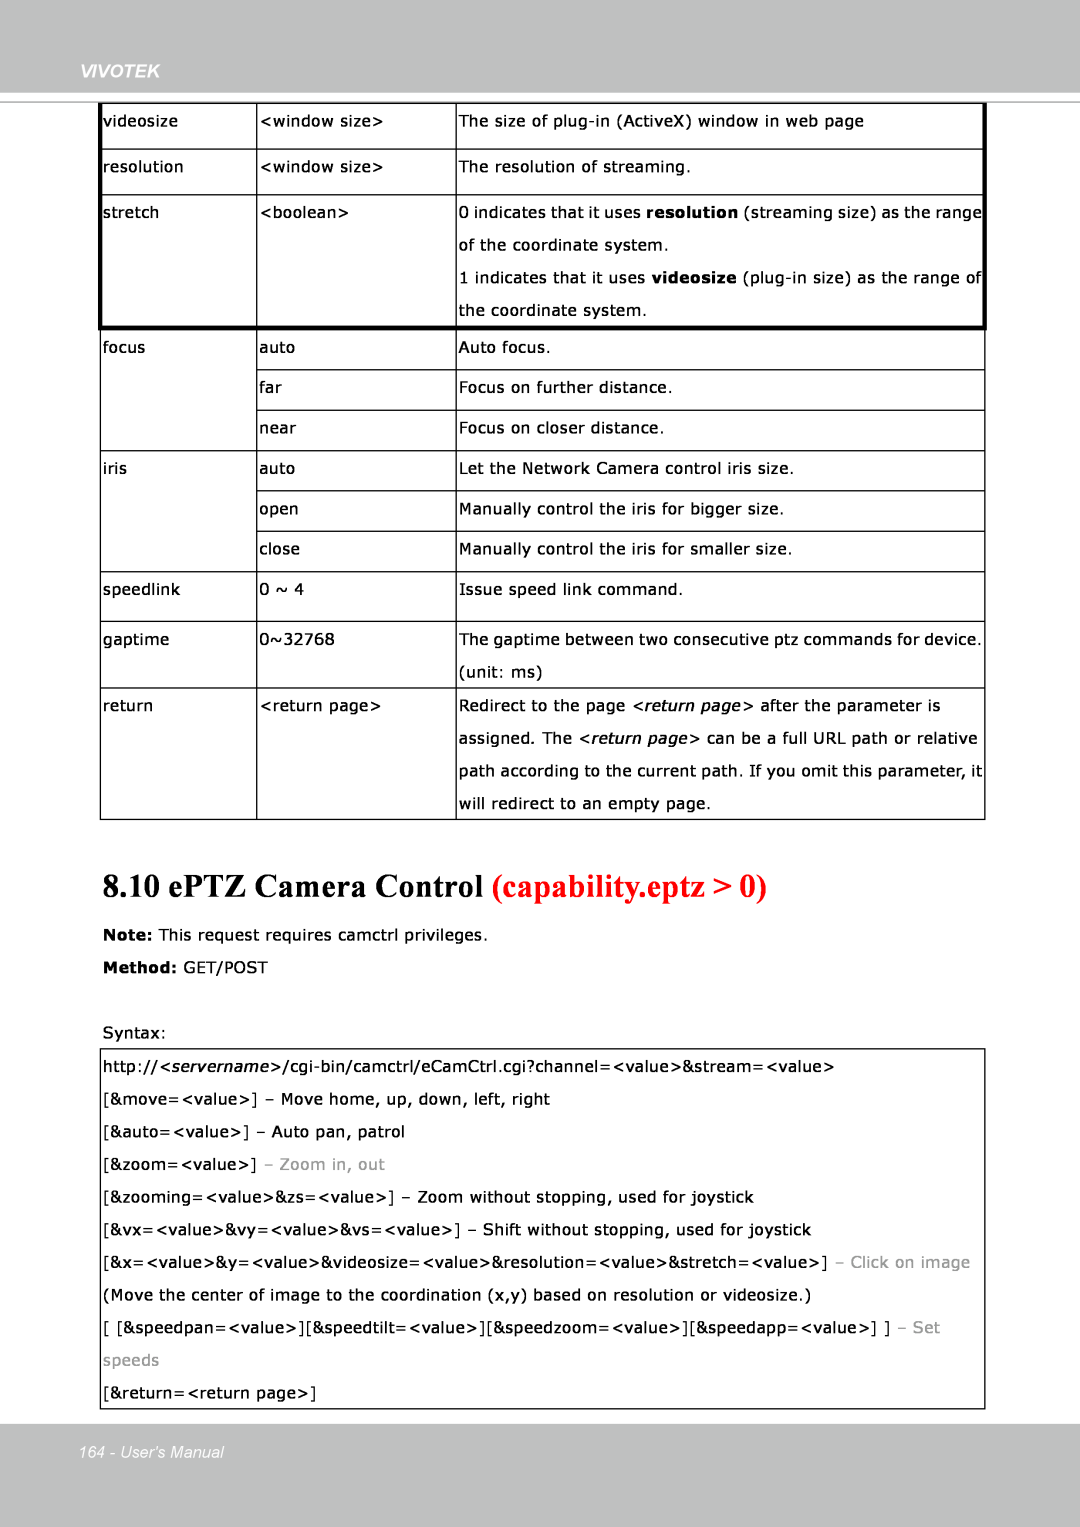 Vivotek IP8352 manual ePTZ Camera Control capability.eptz >, Vivotek, Method: GET/POST, Users Manual 